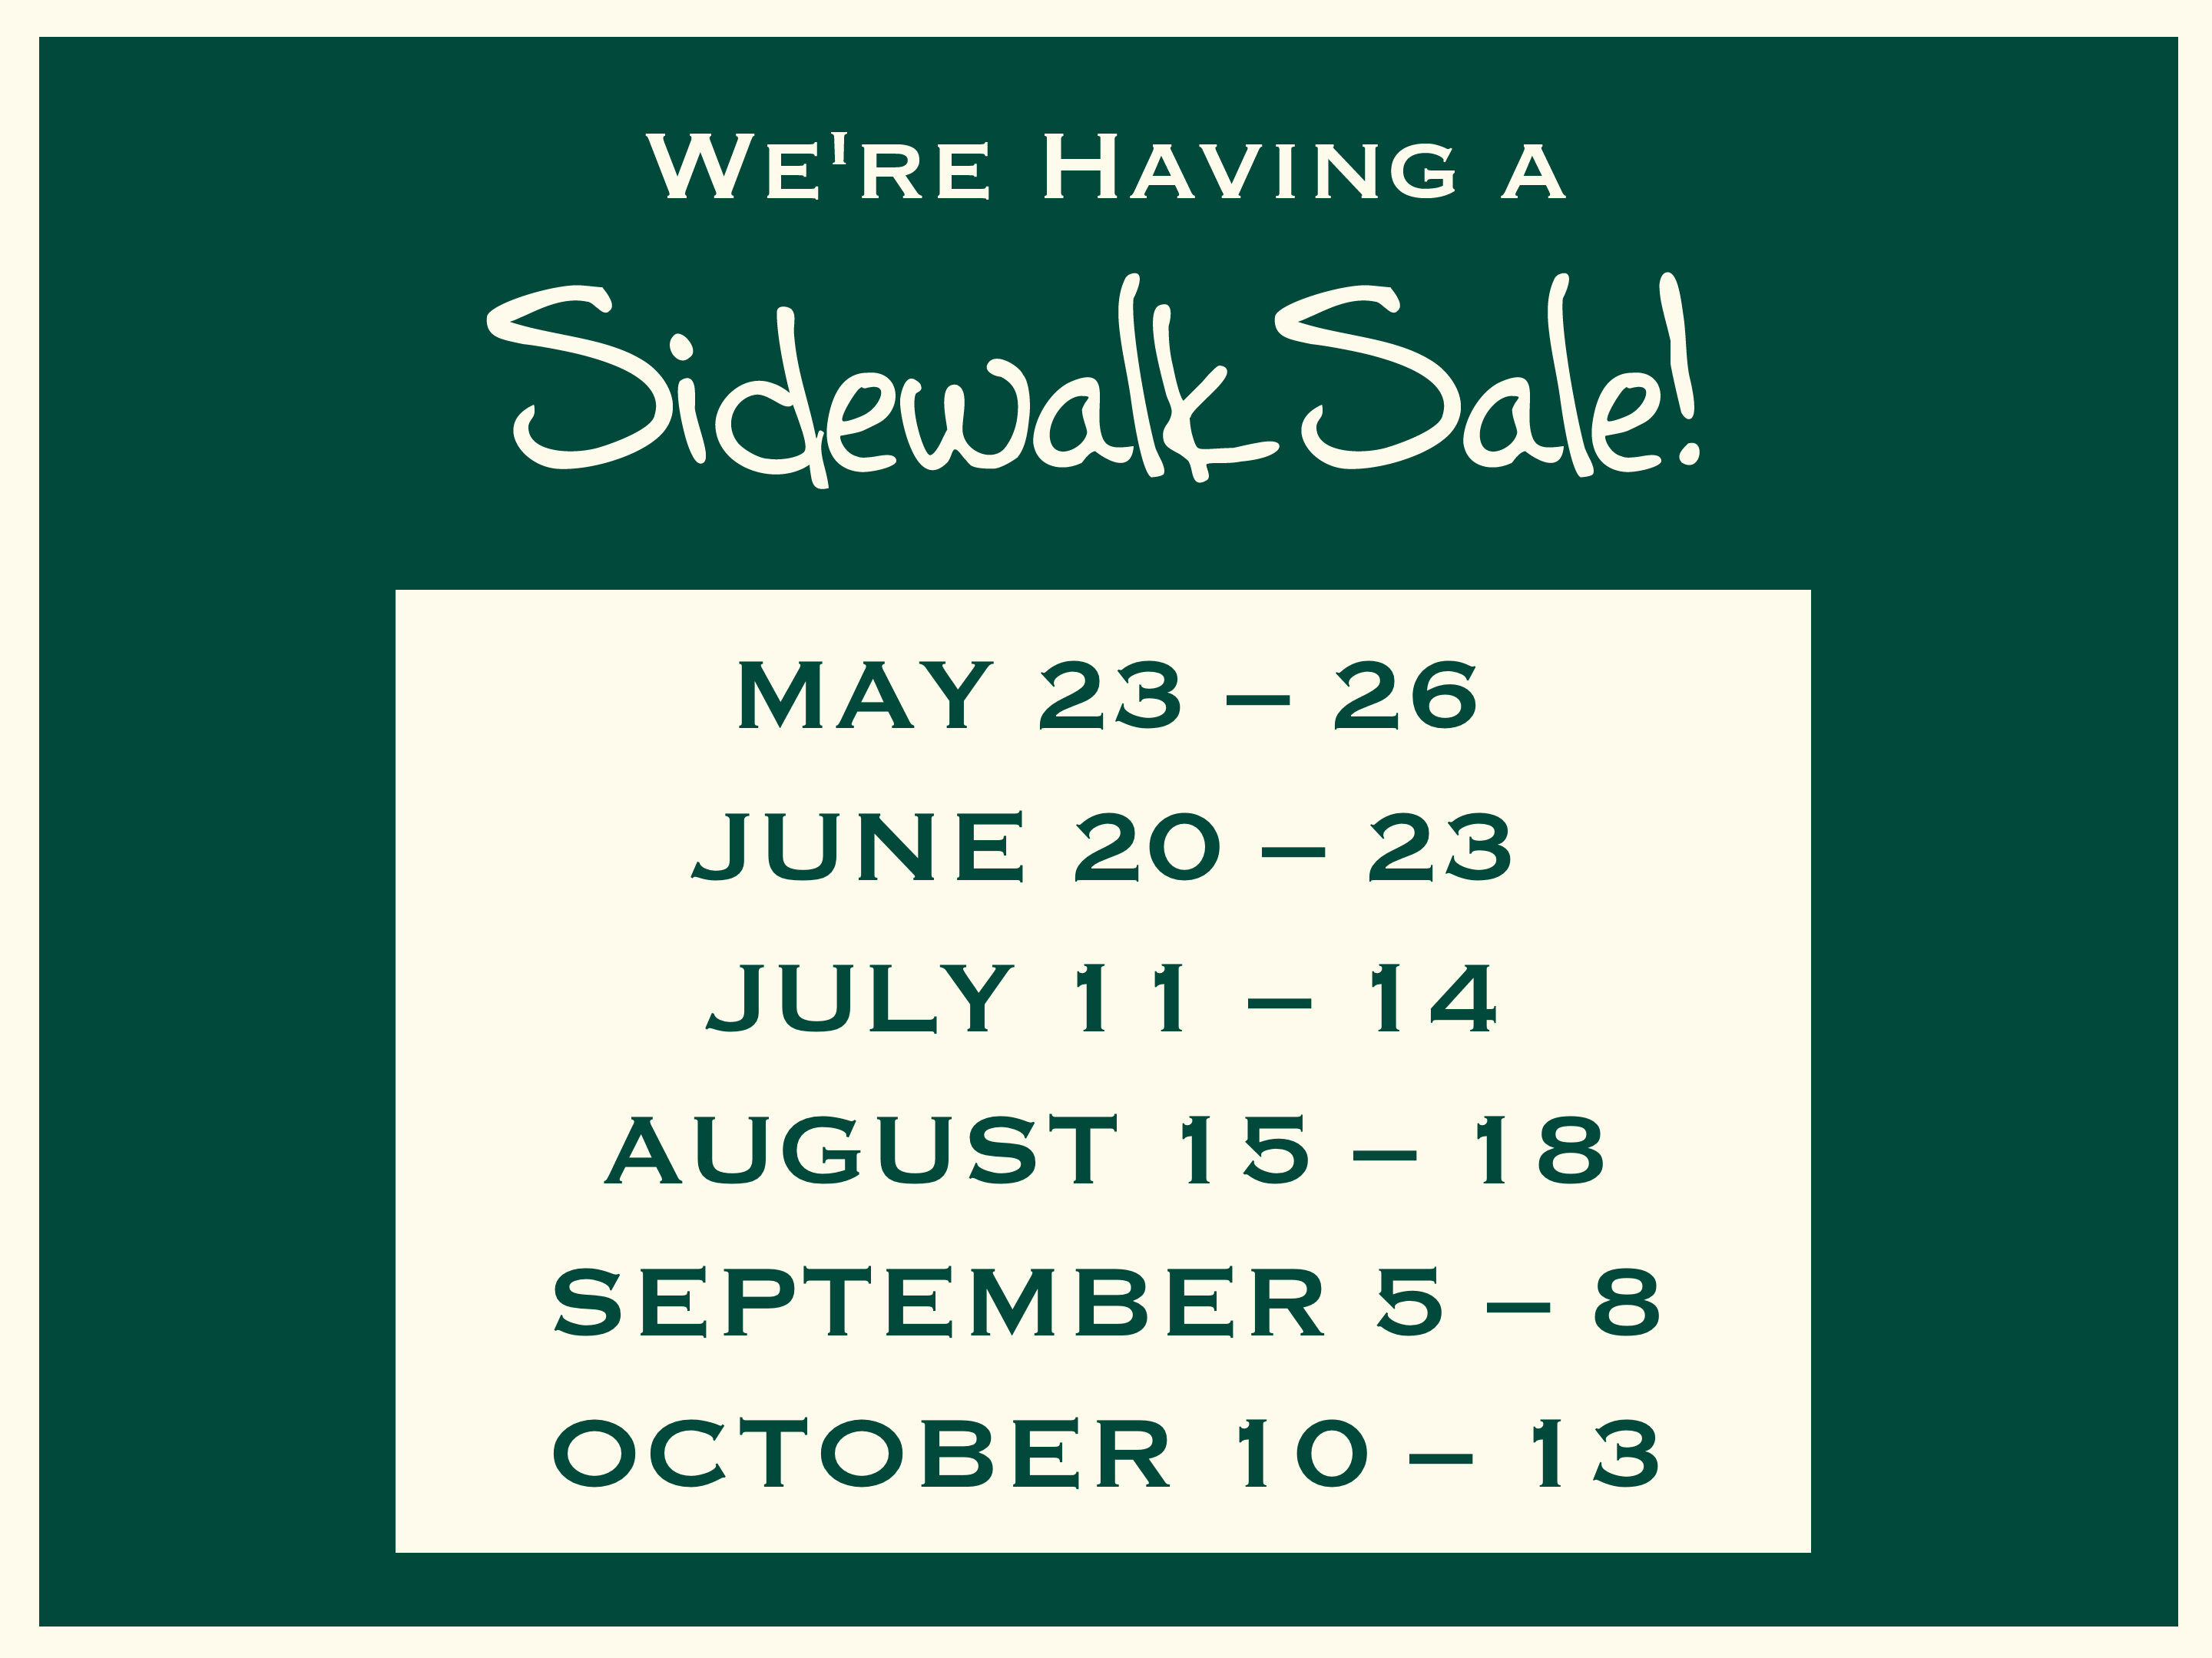 We're Having A Sidewalk Sale!